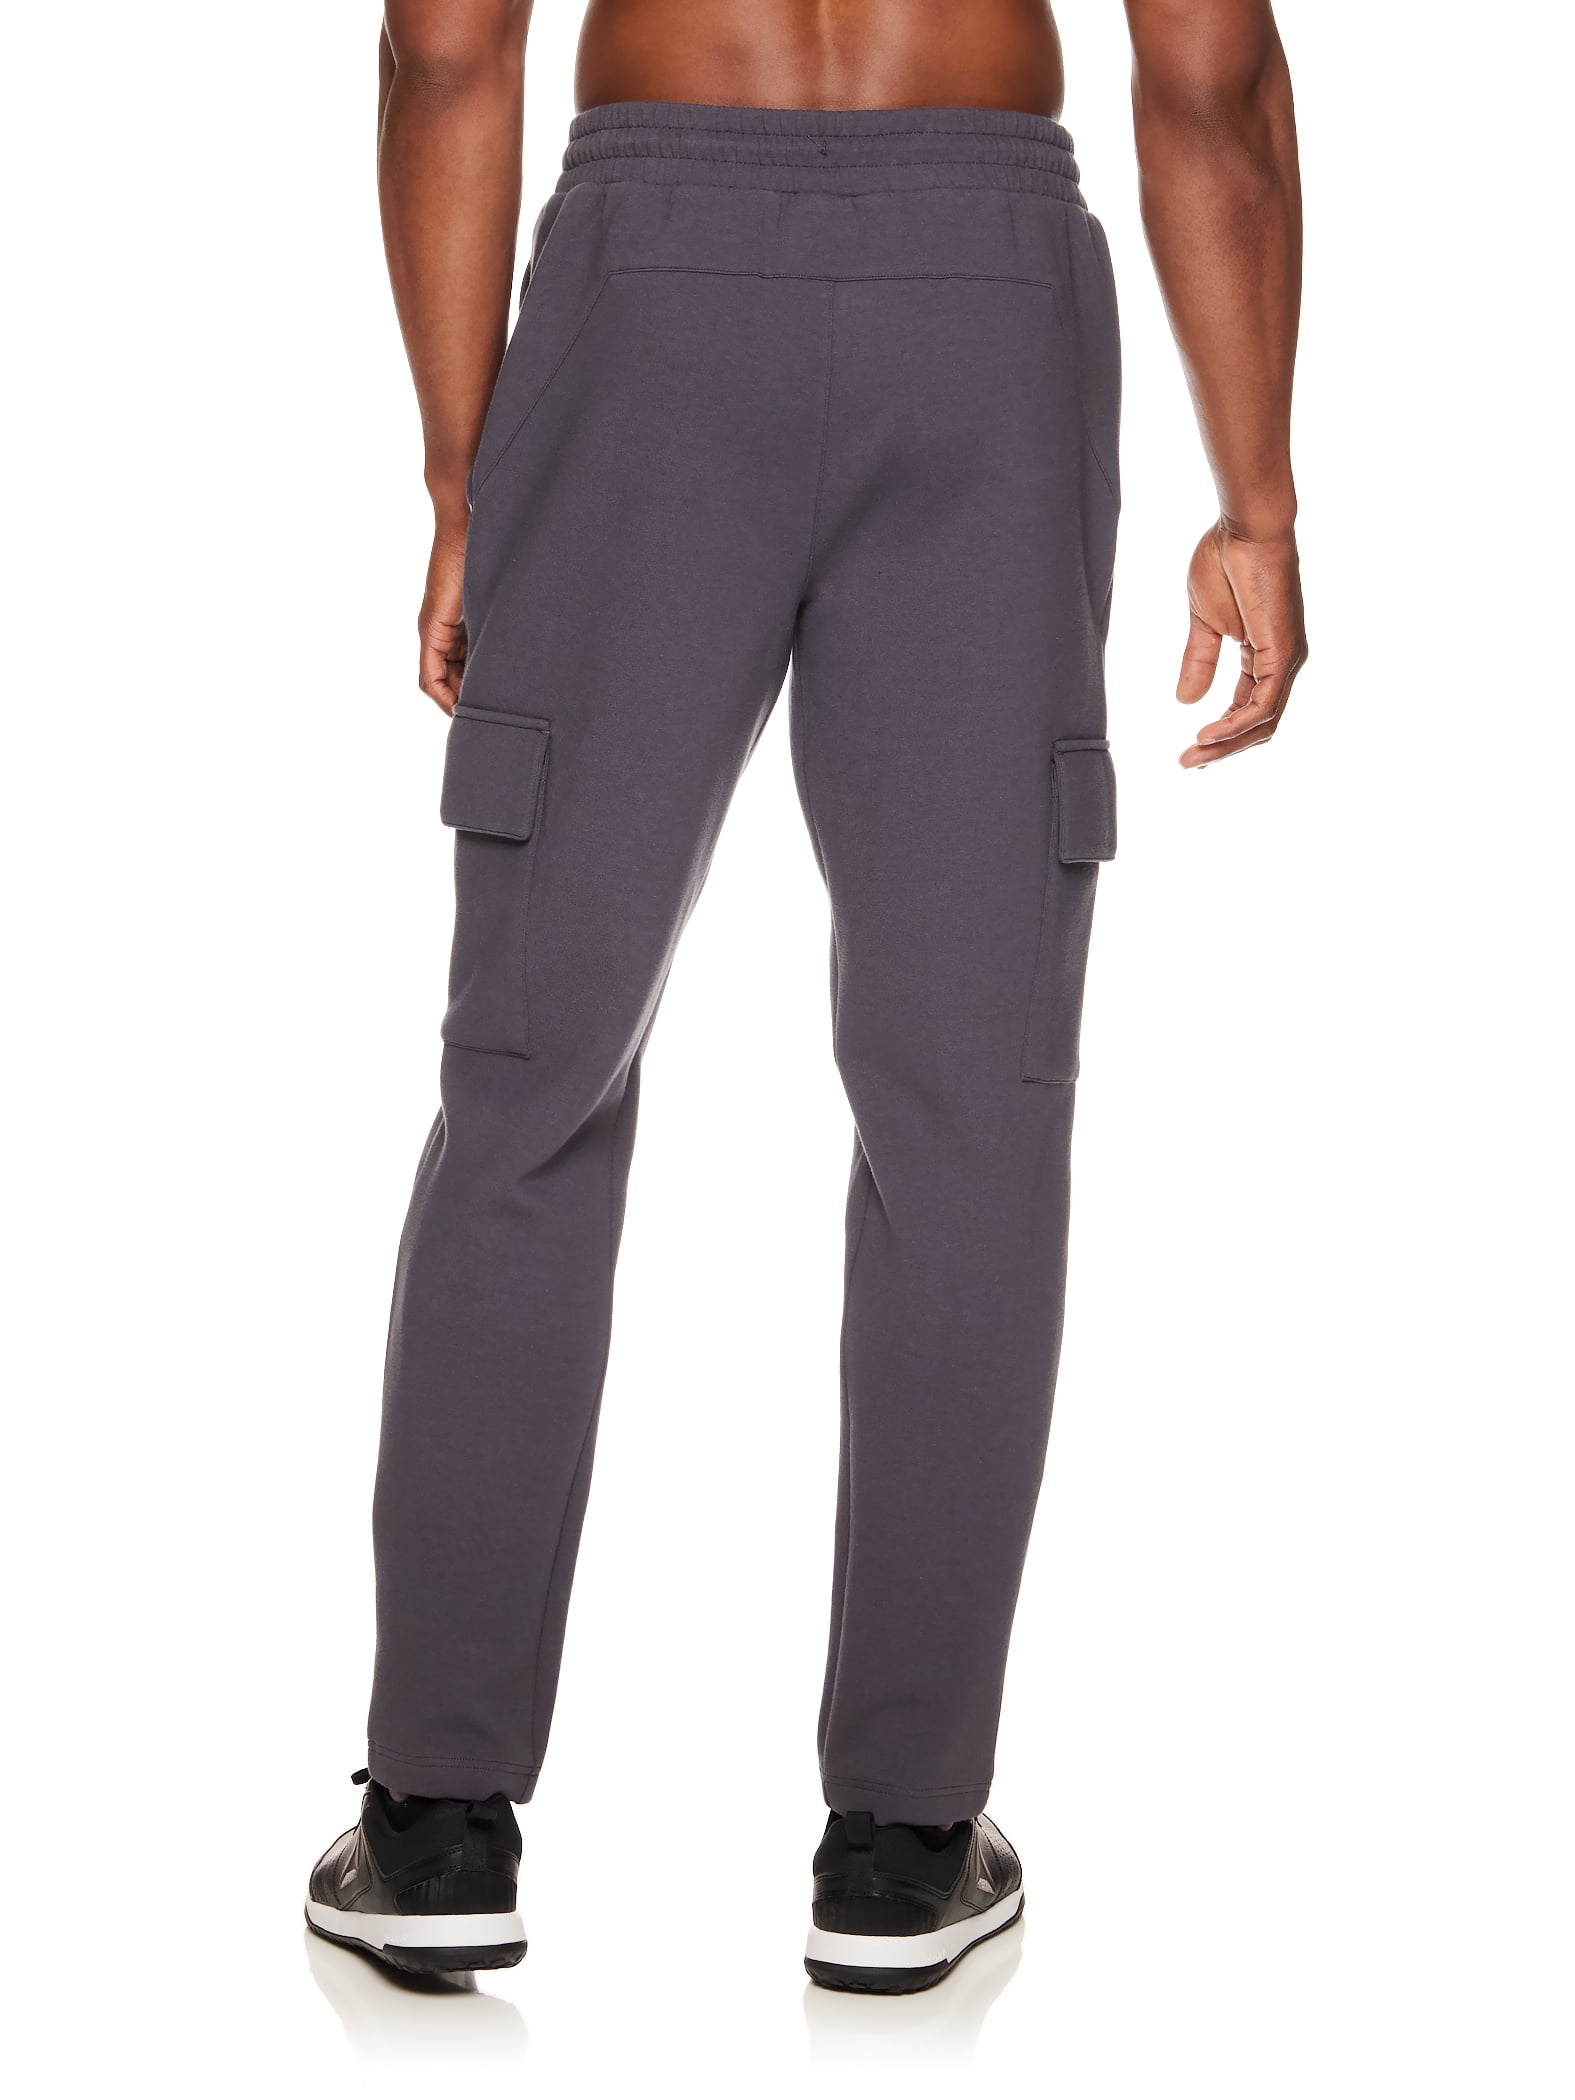 Reebok Men's Unwind Cargo Pants, Size: Small, Gray